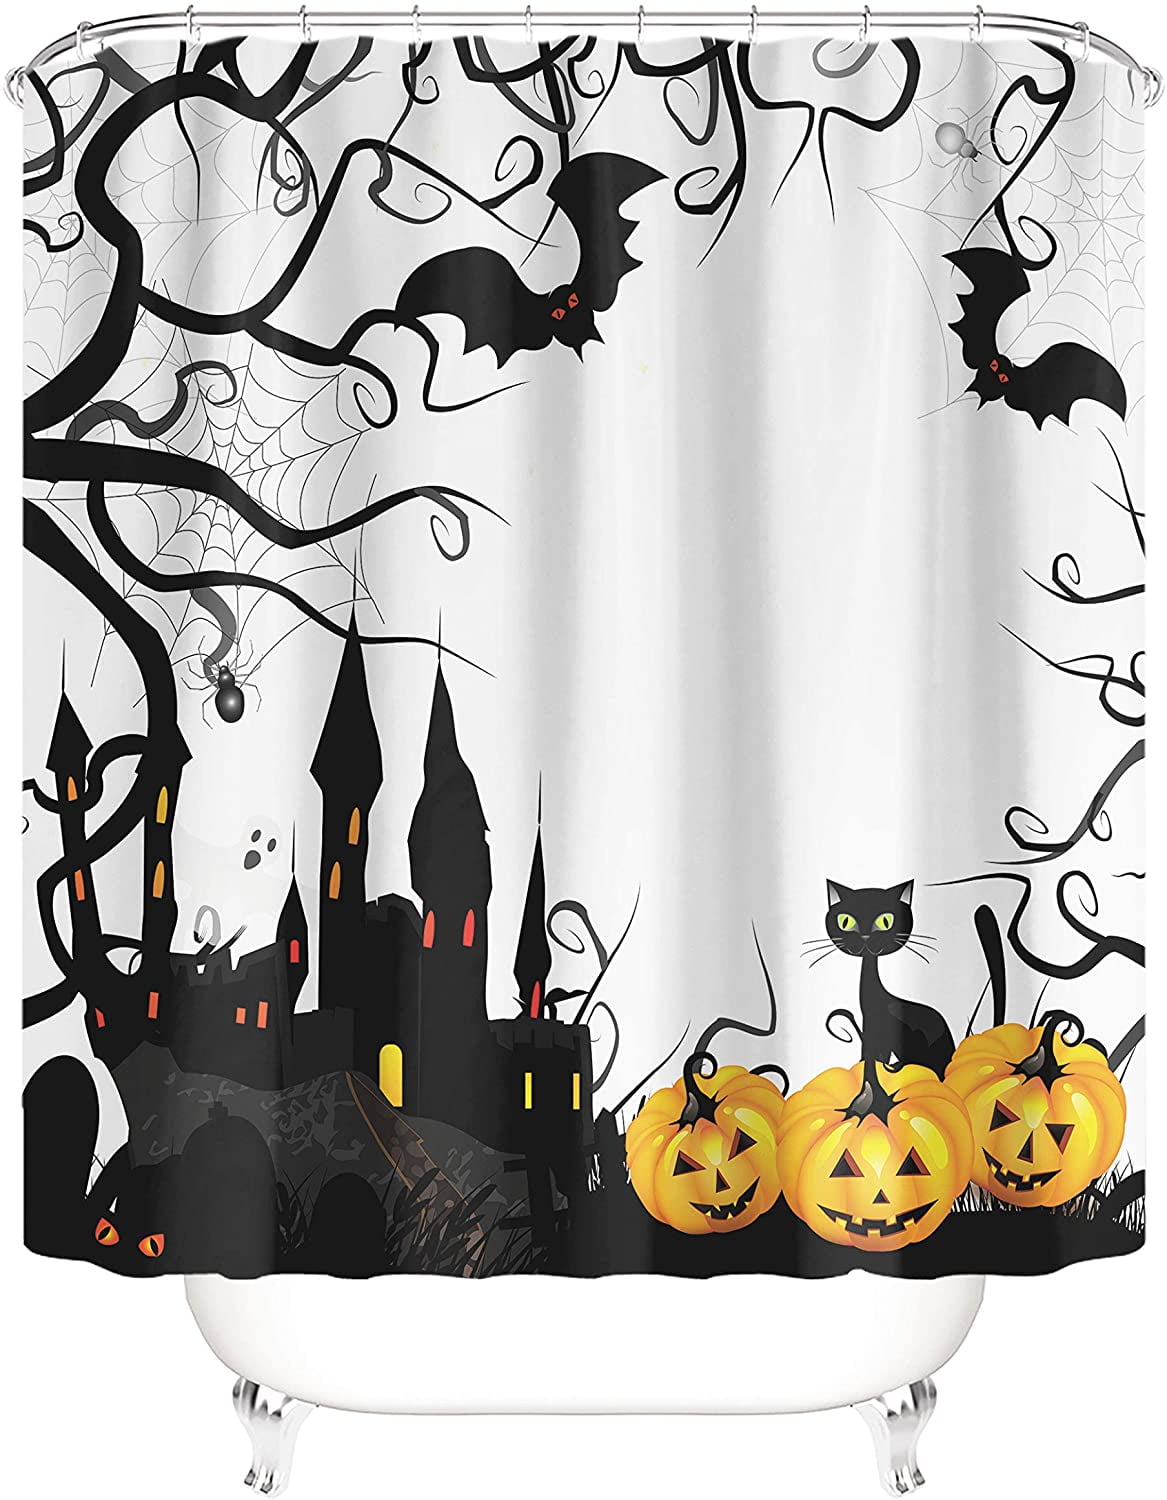 Happy Halloween Bathroom Waterproof Fabric Cartoon Black Cat Shower Curtain Set 